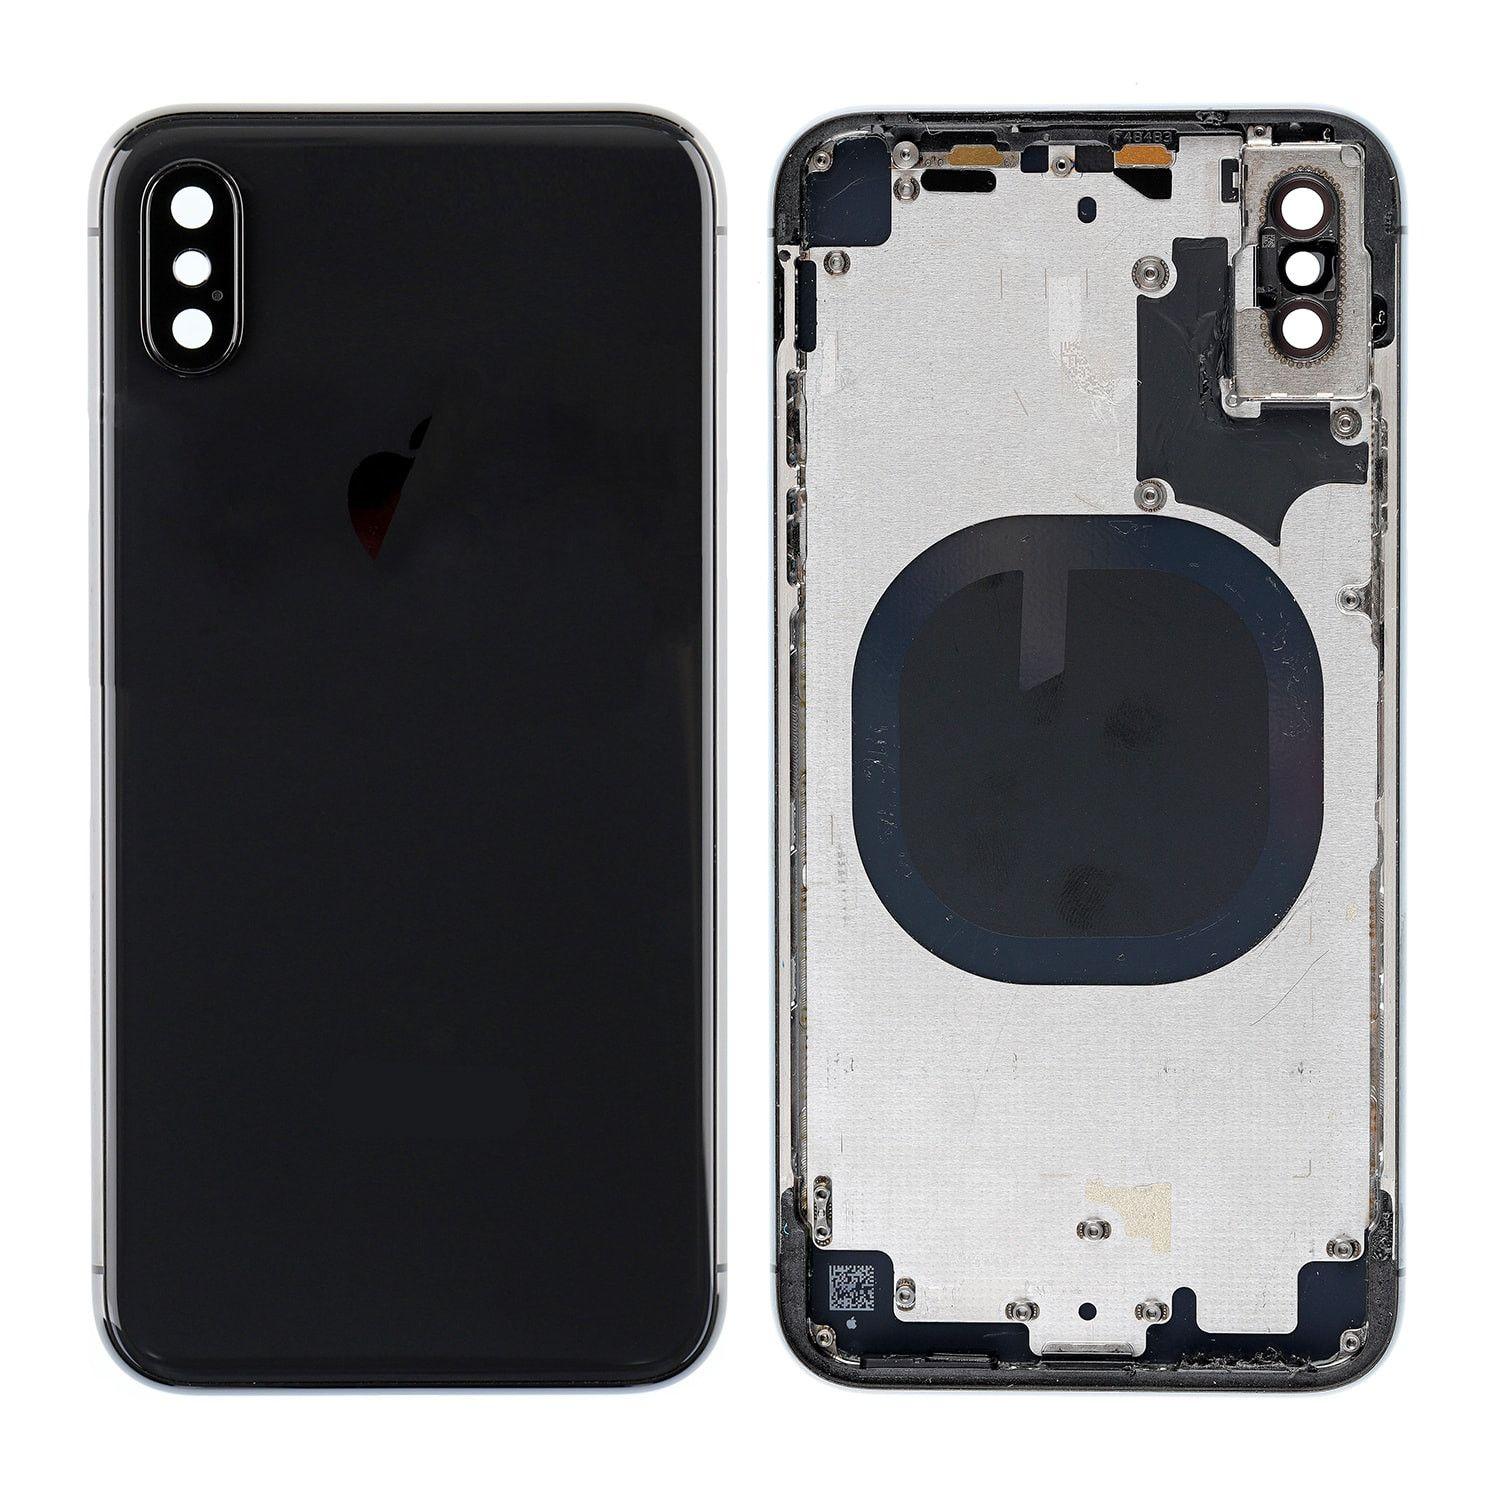 Korpus iPhone X + zadní kryt černý